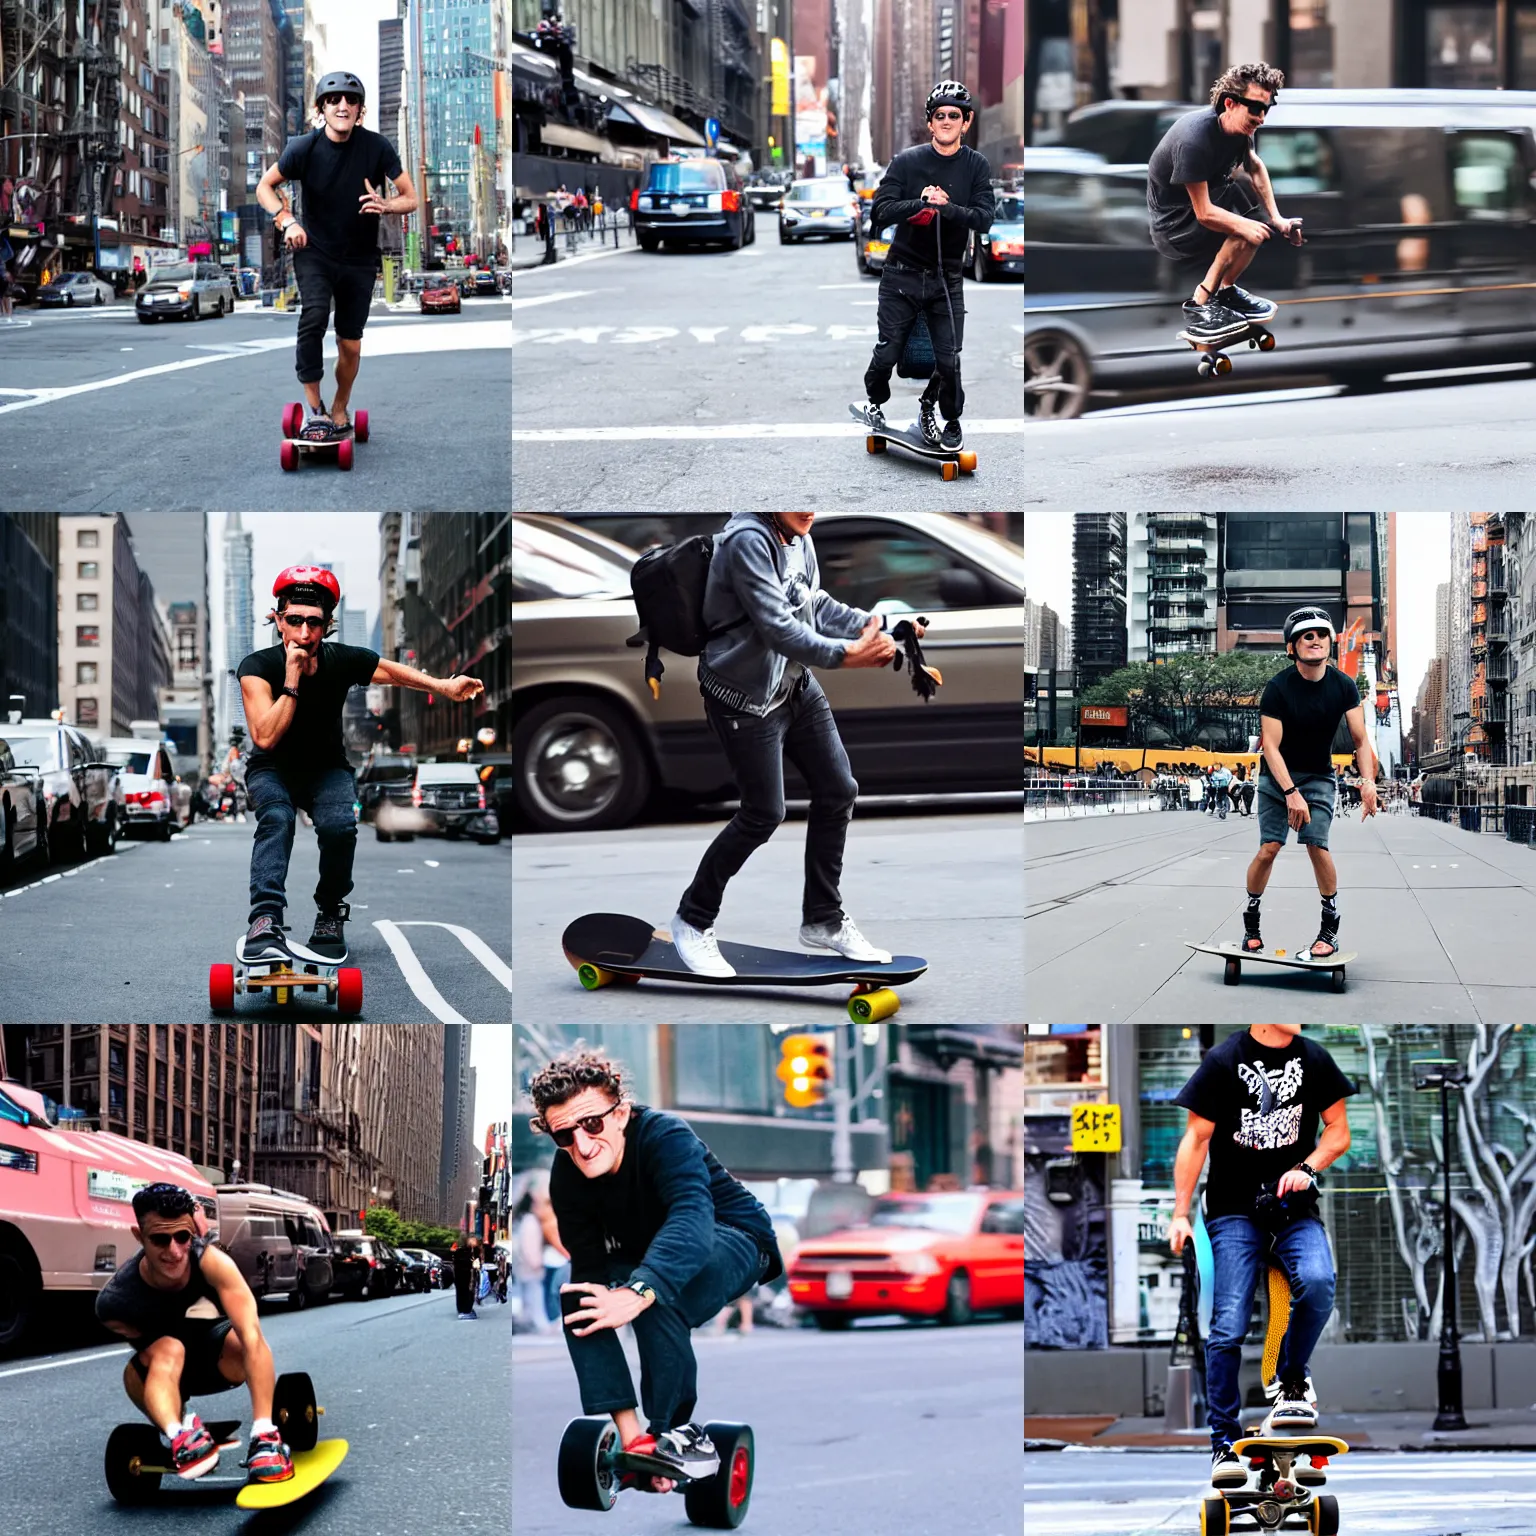 Prompt: casey neistat riding skateboard in new york city